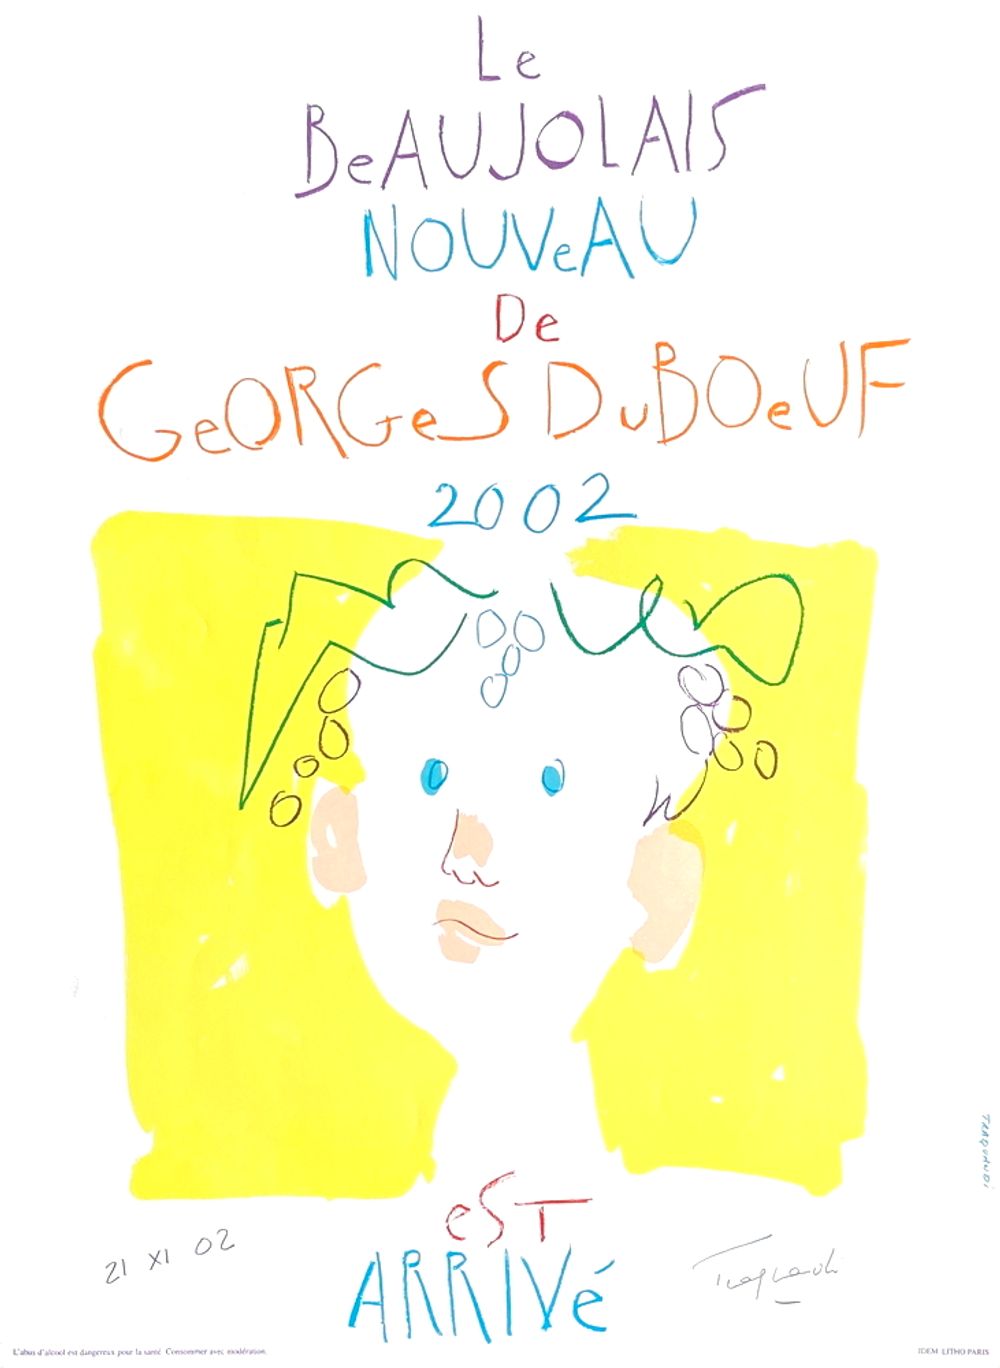 Beaujolais Georges Duboeuf 2002